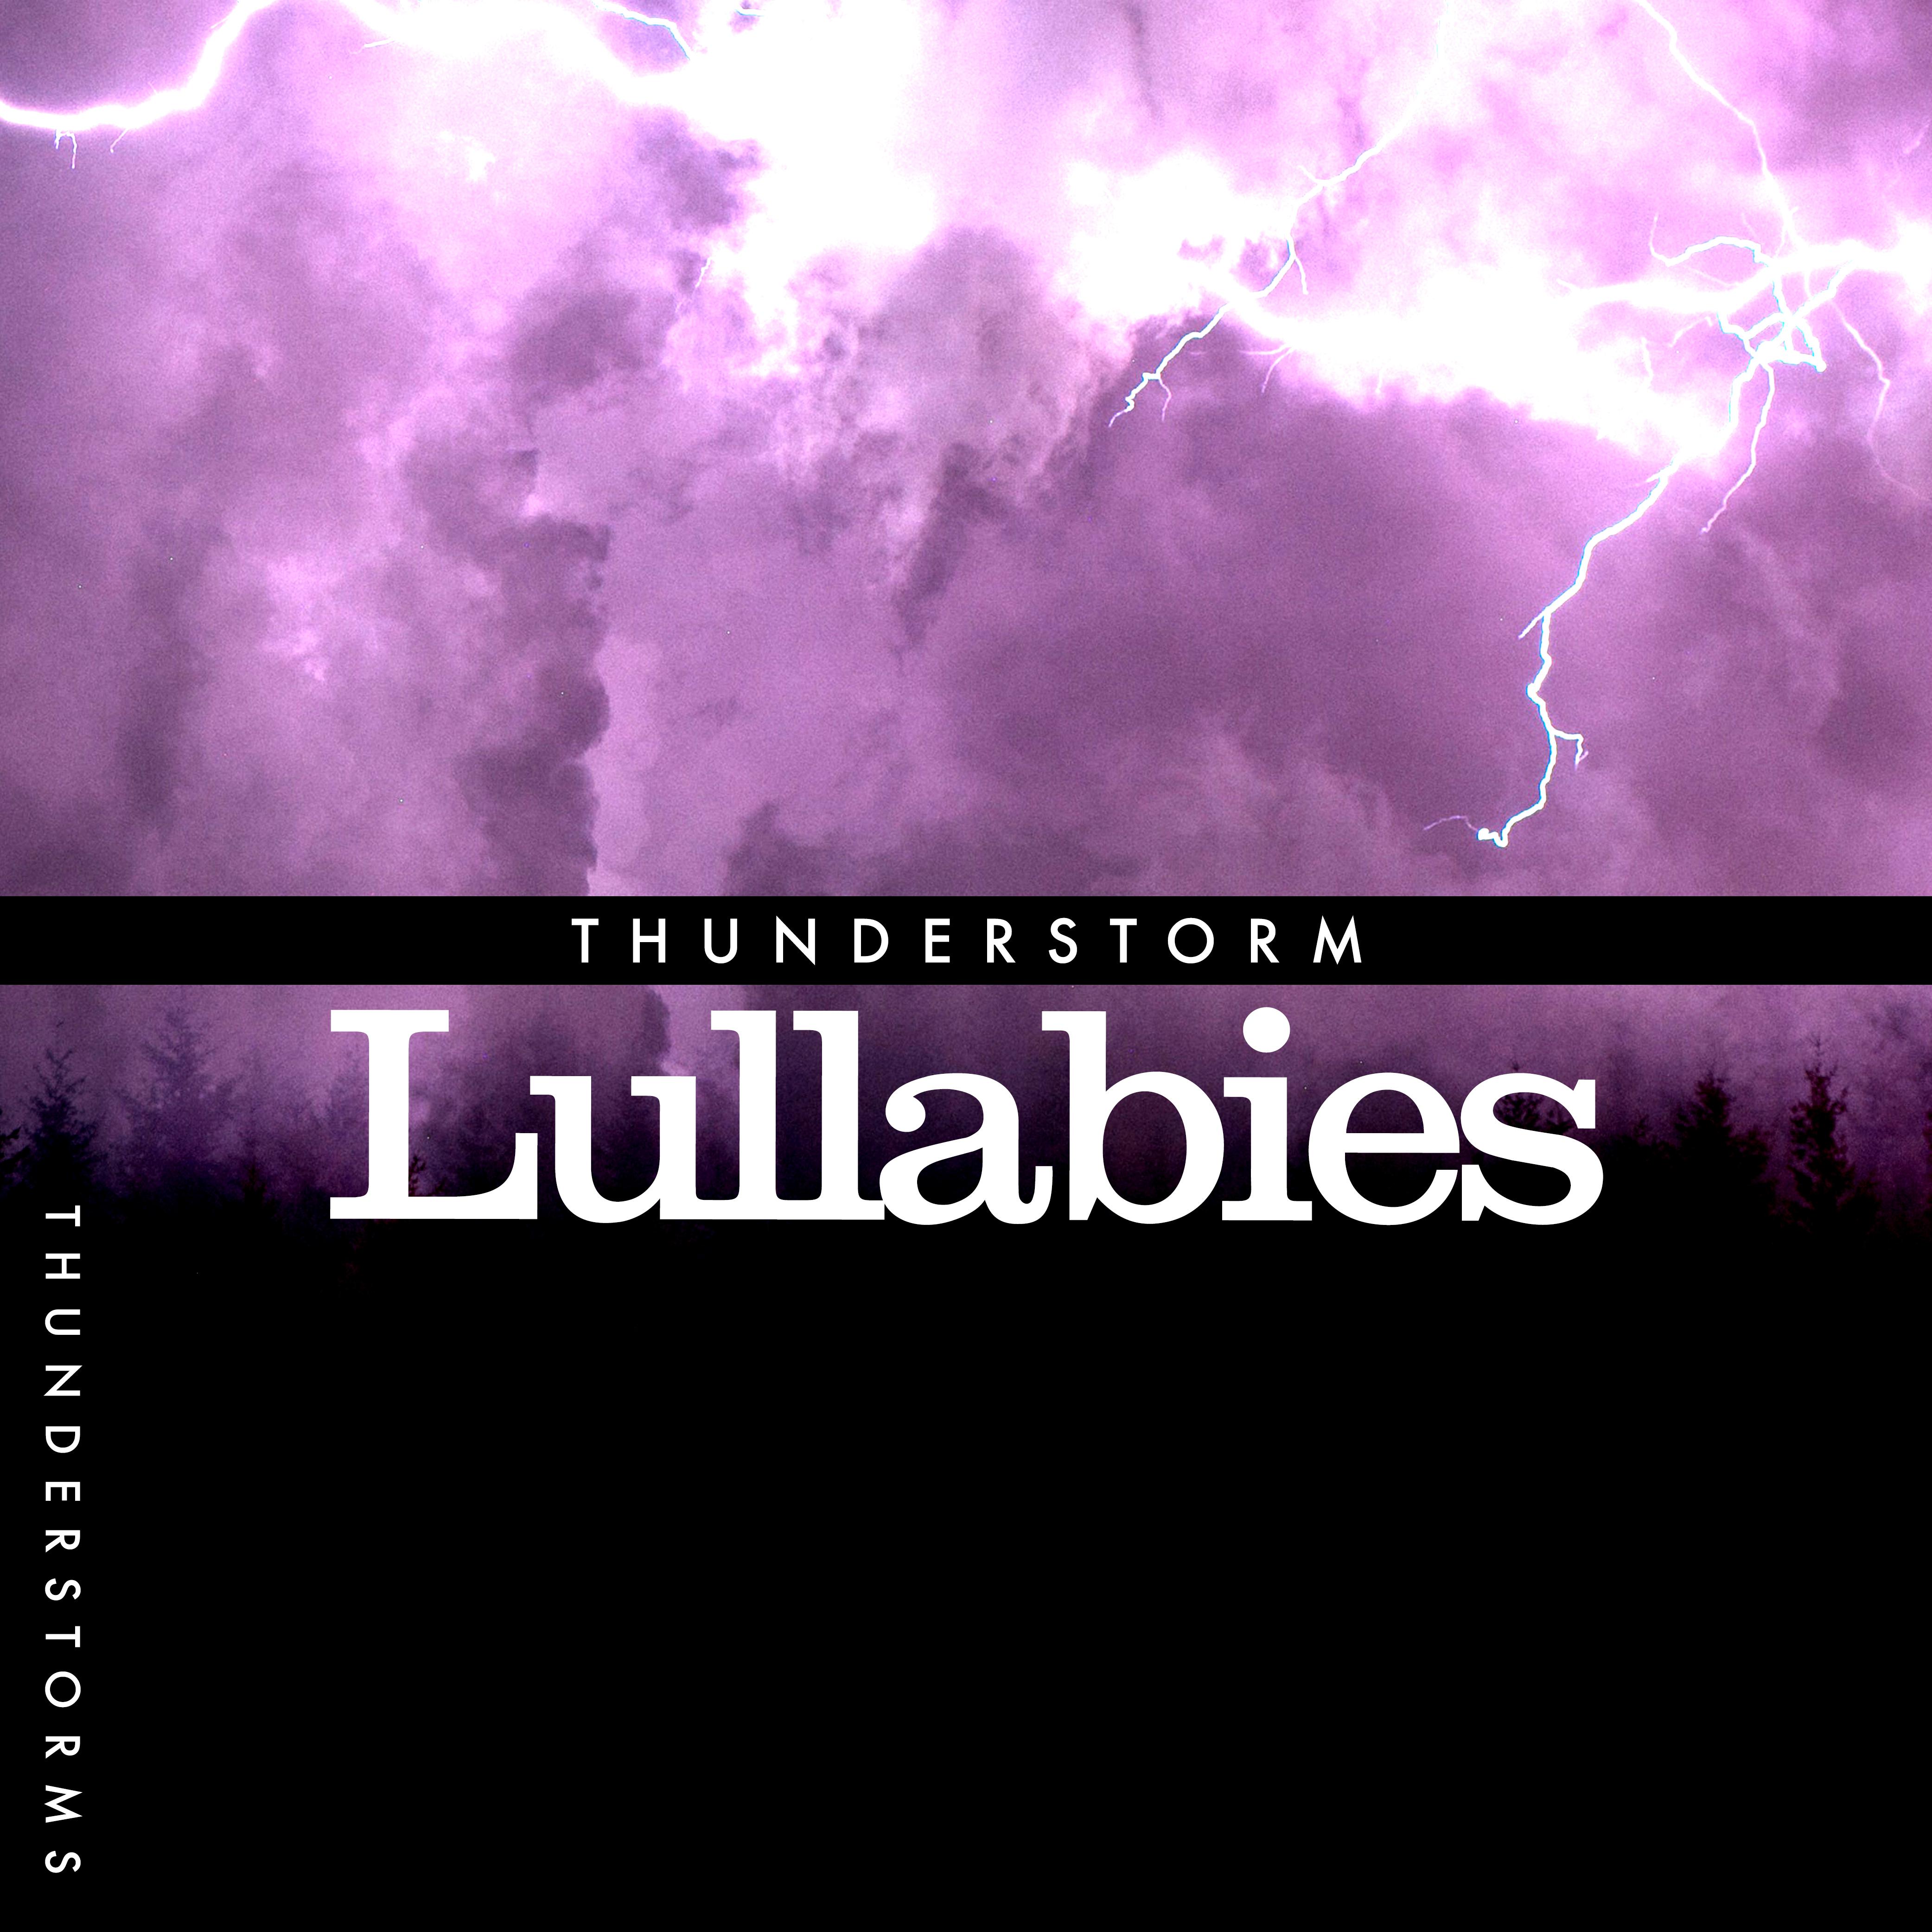 Thunderstorm Lullabies